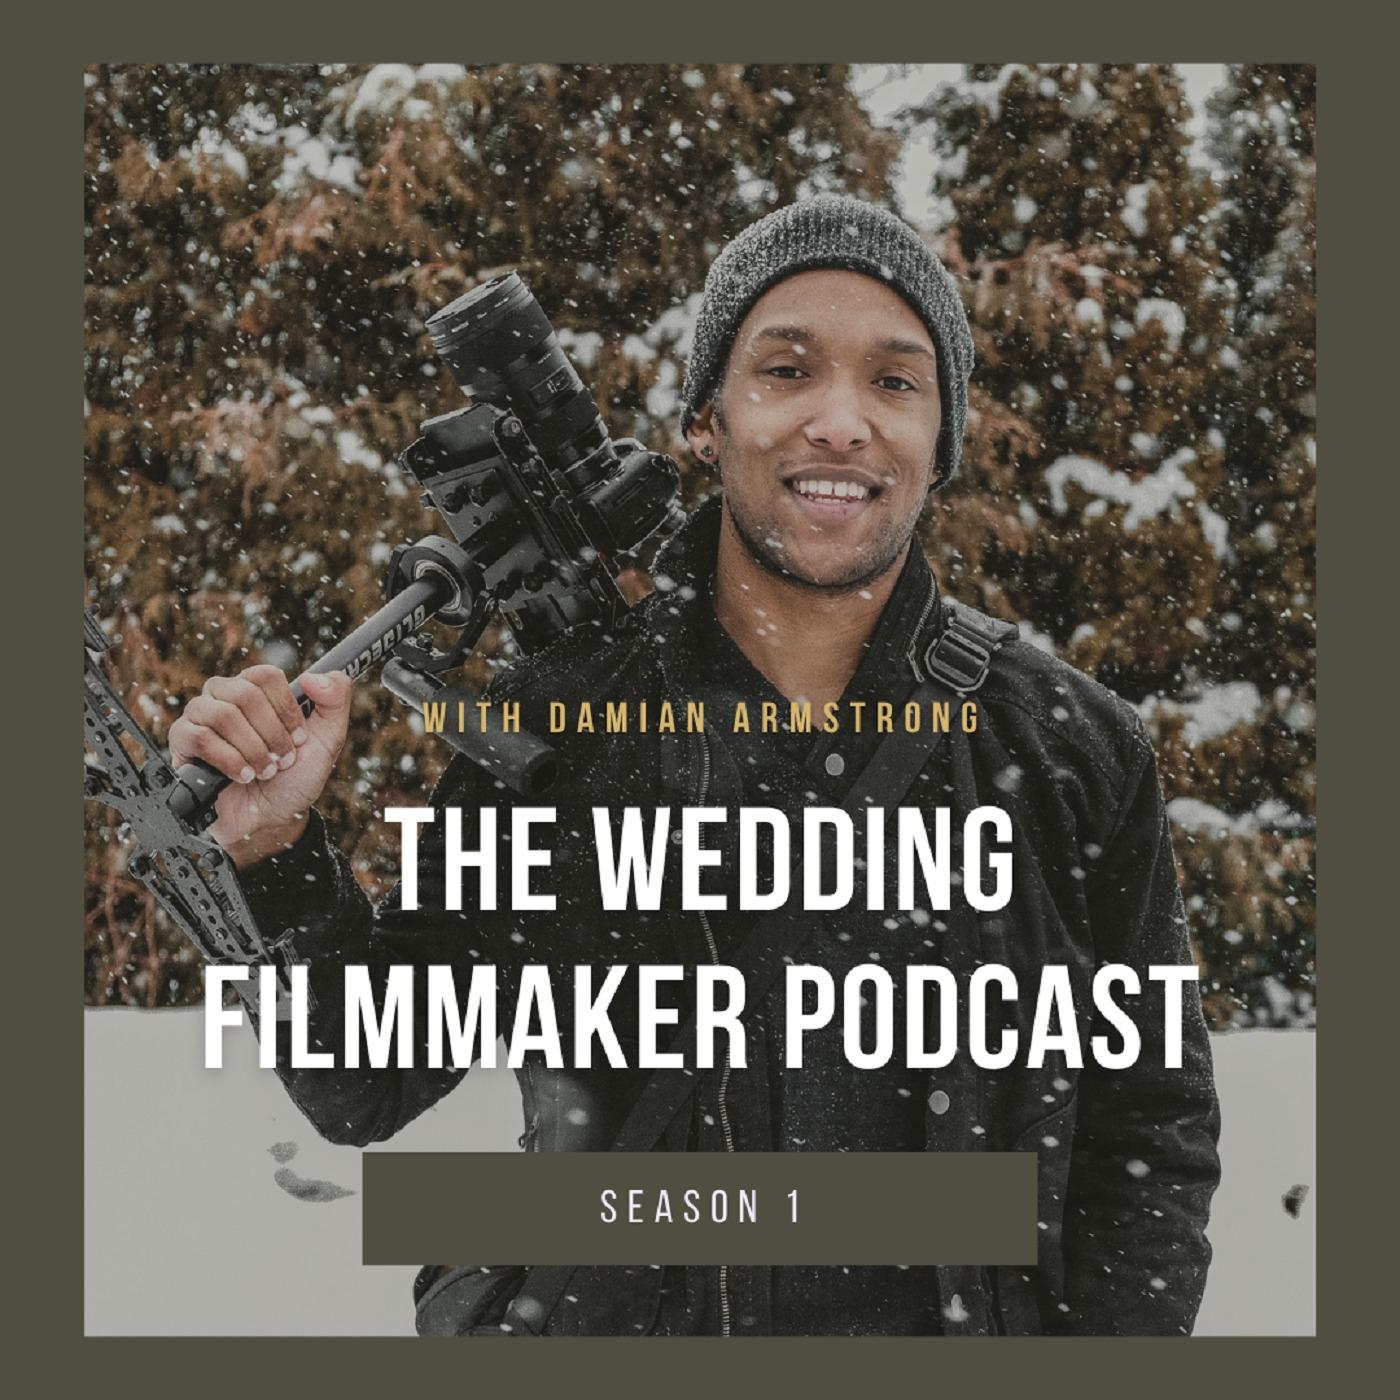 The Wedding Filmmaker Podcast